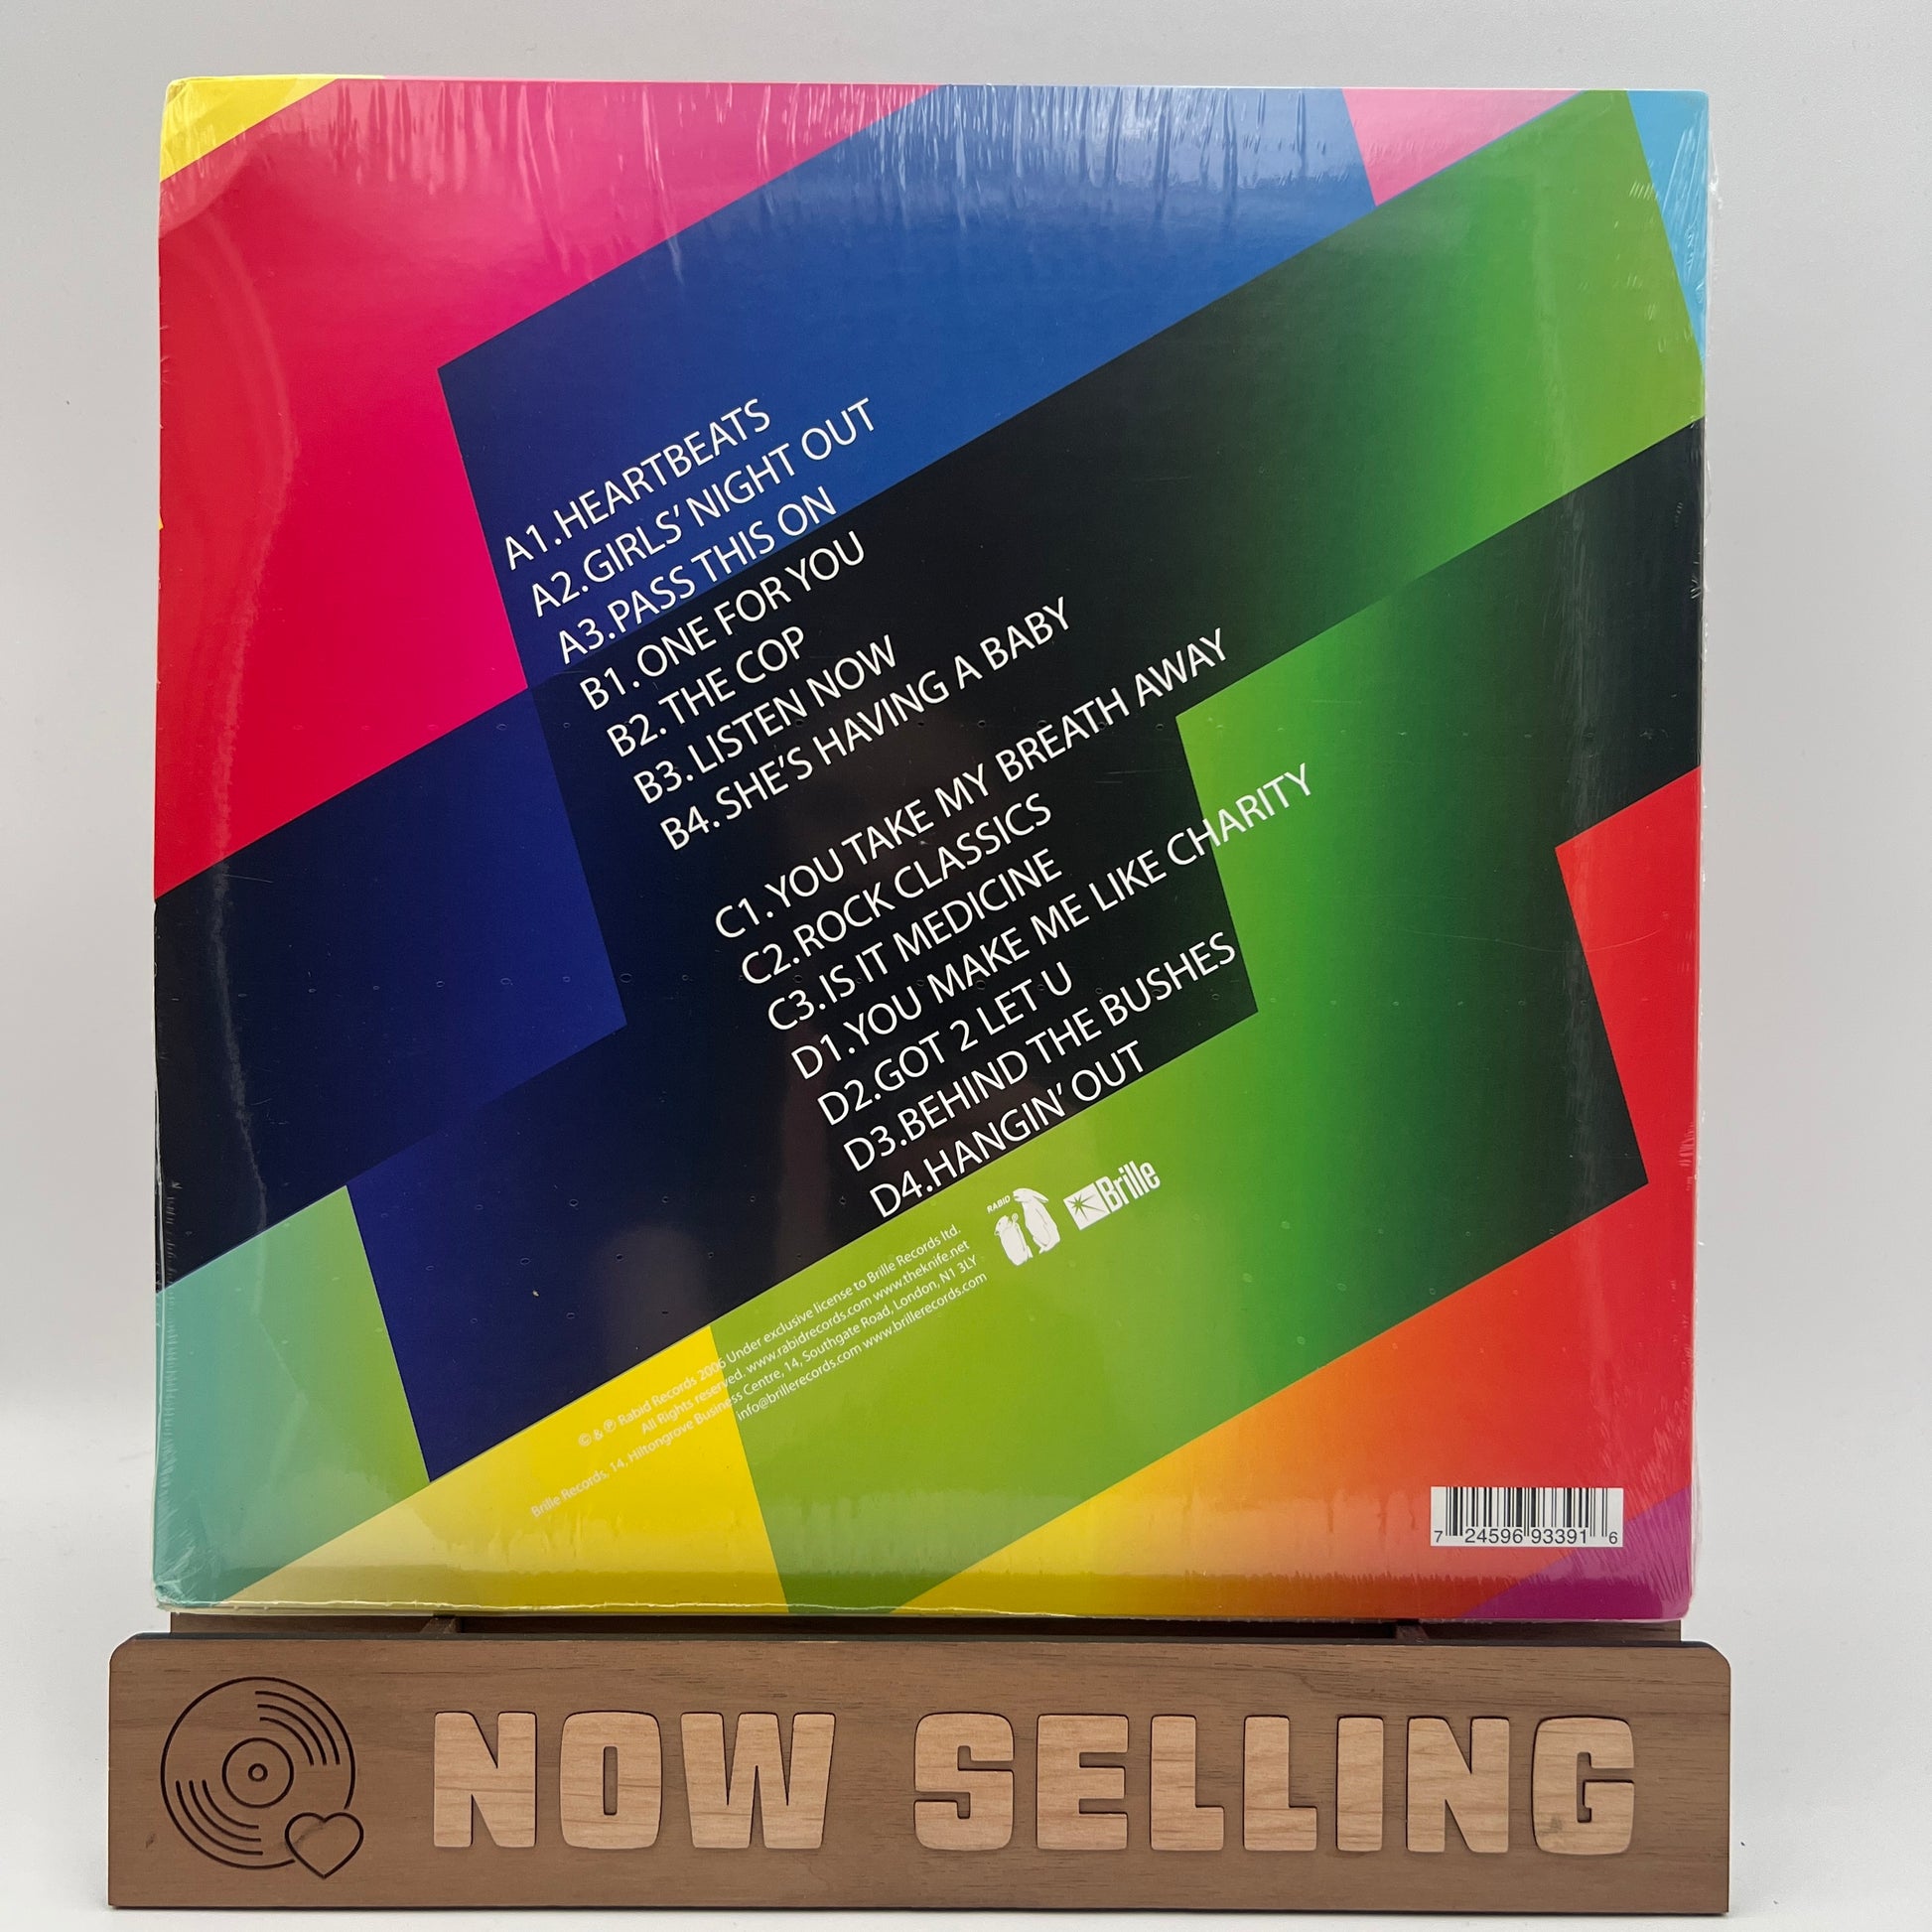 The Knife - Cuts Vinyl LP Reissue SEALED Vinyl Devotion